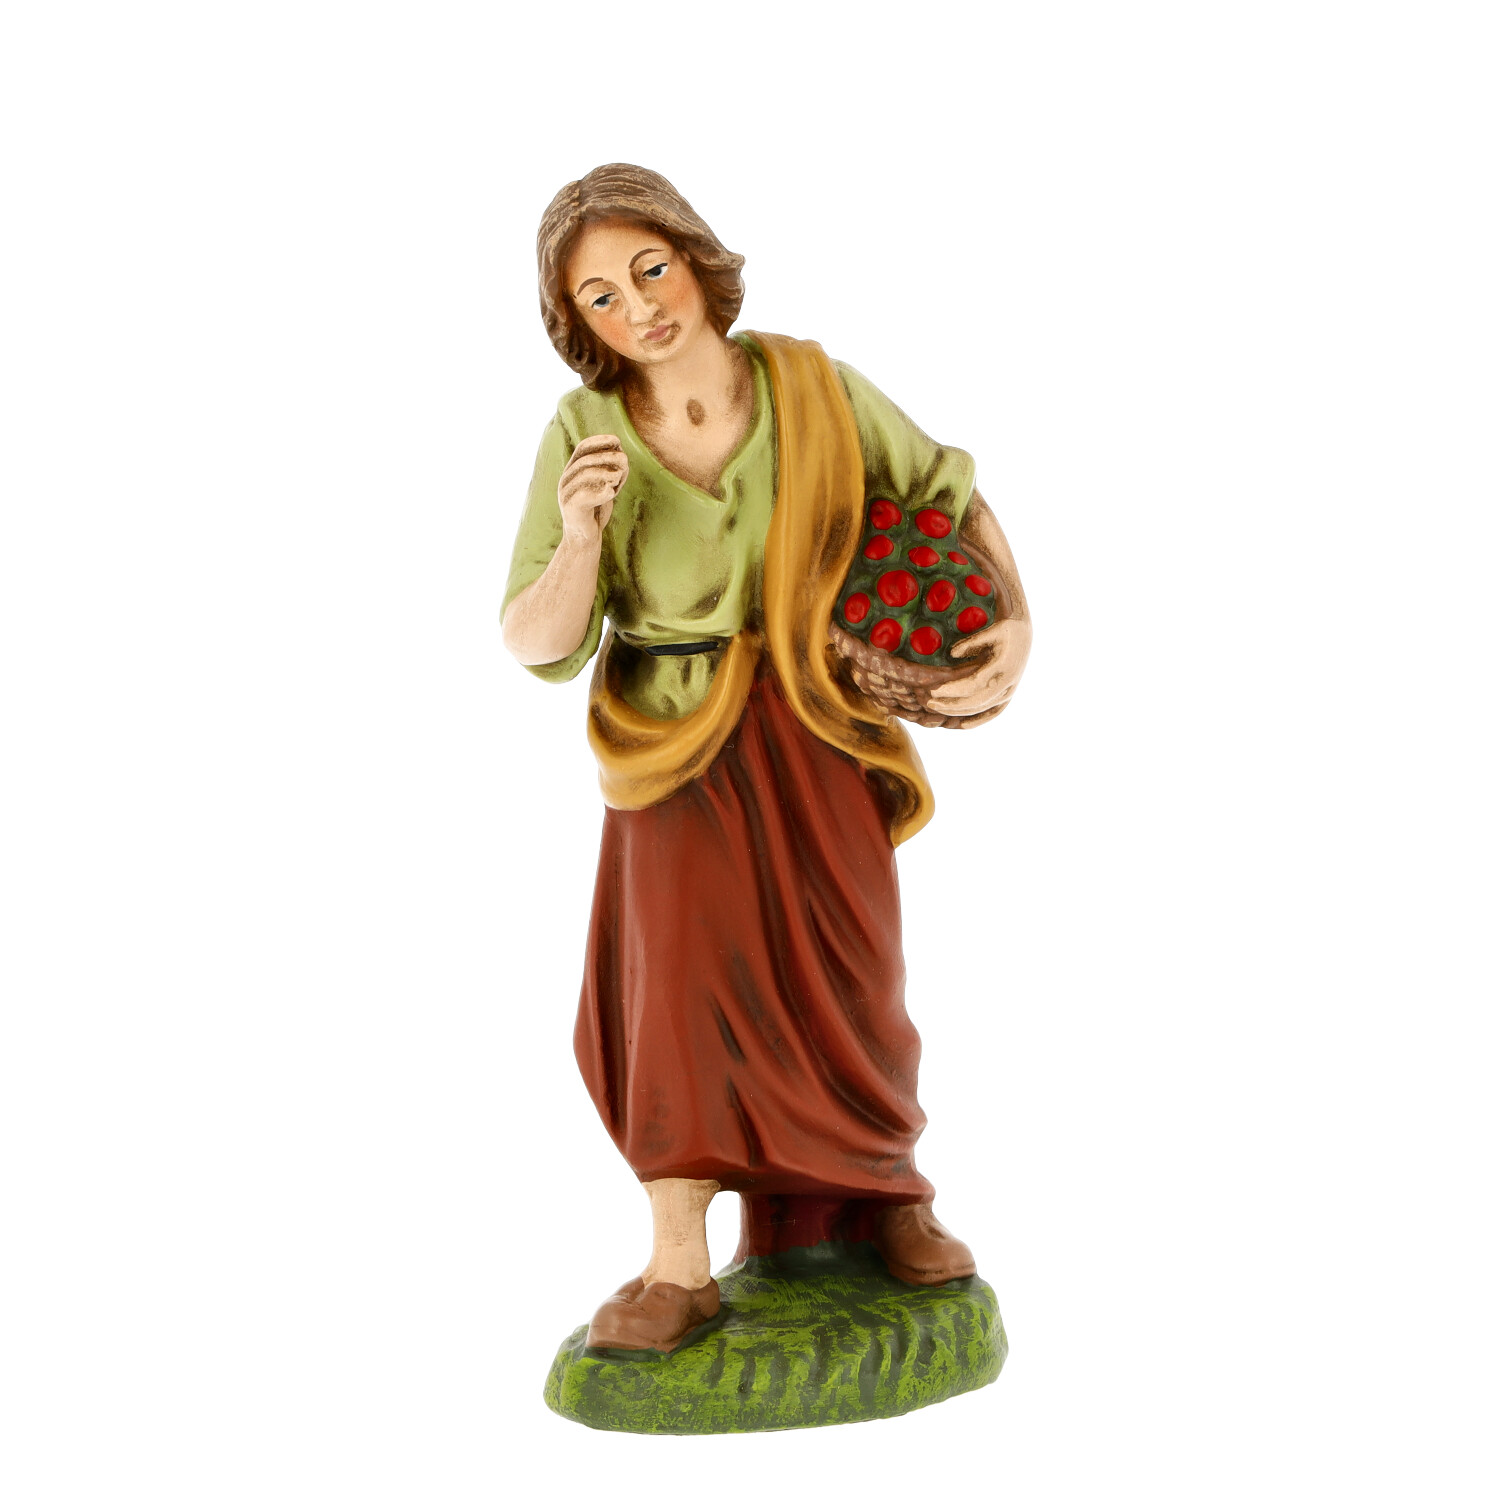 Shepherdess with fruit basket - Marolin Nativity figure - made in Germany